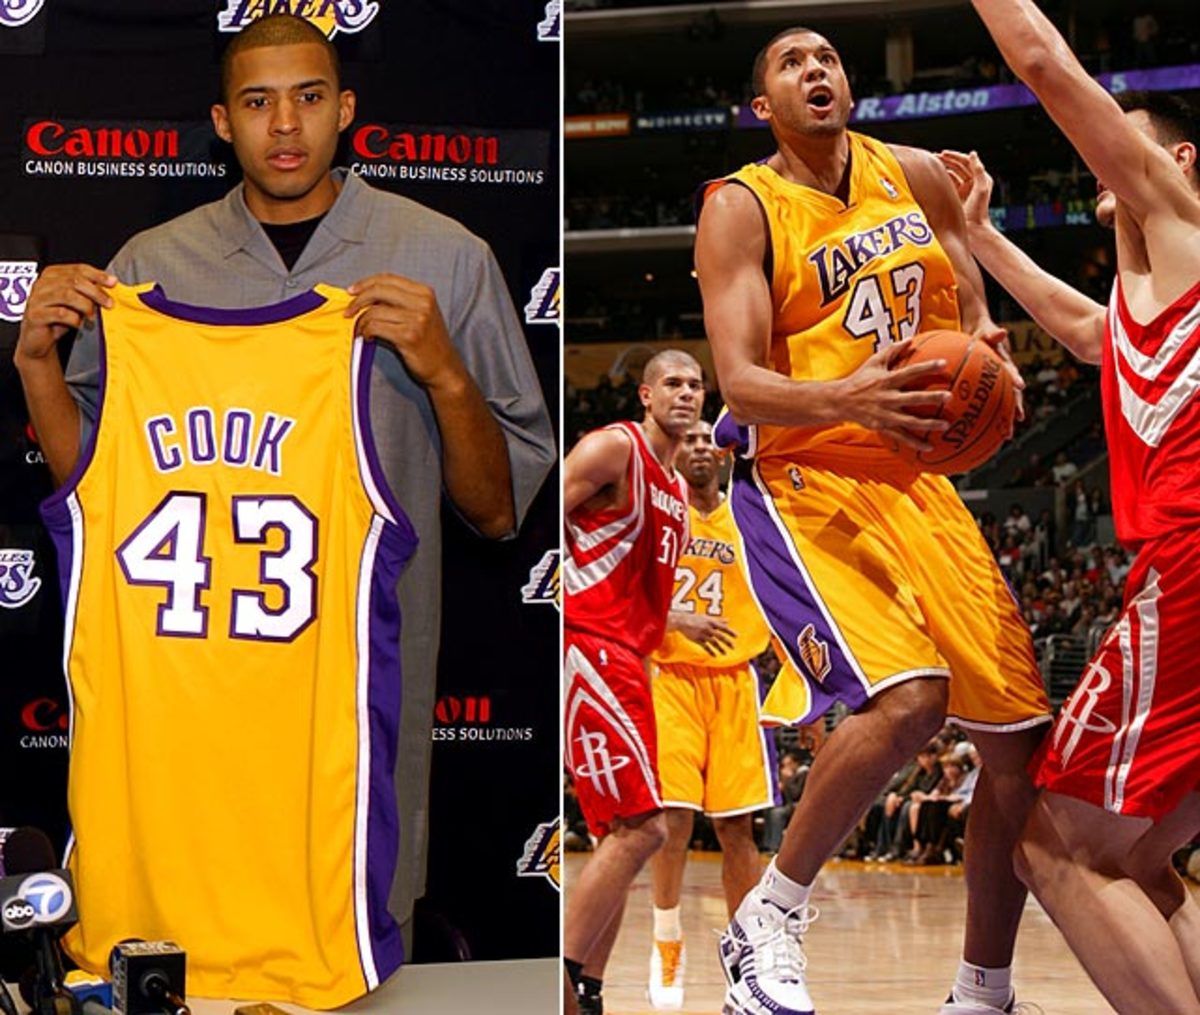 LA Lakers: Brian Cook